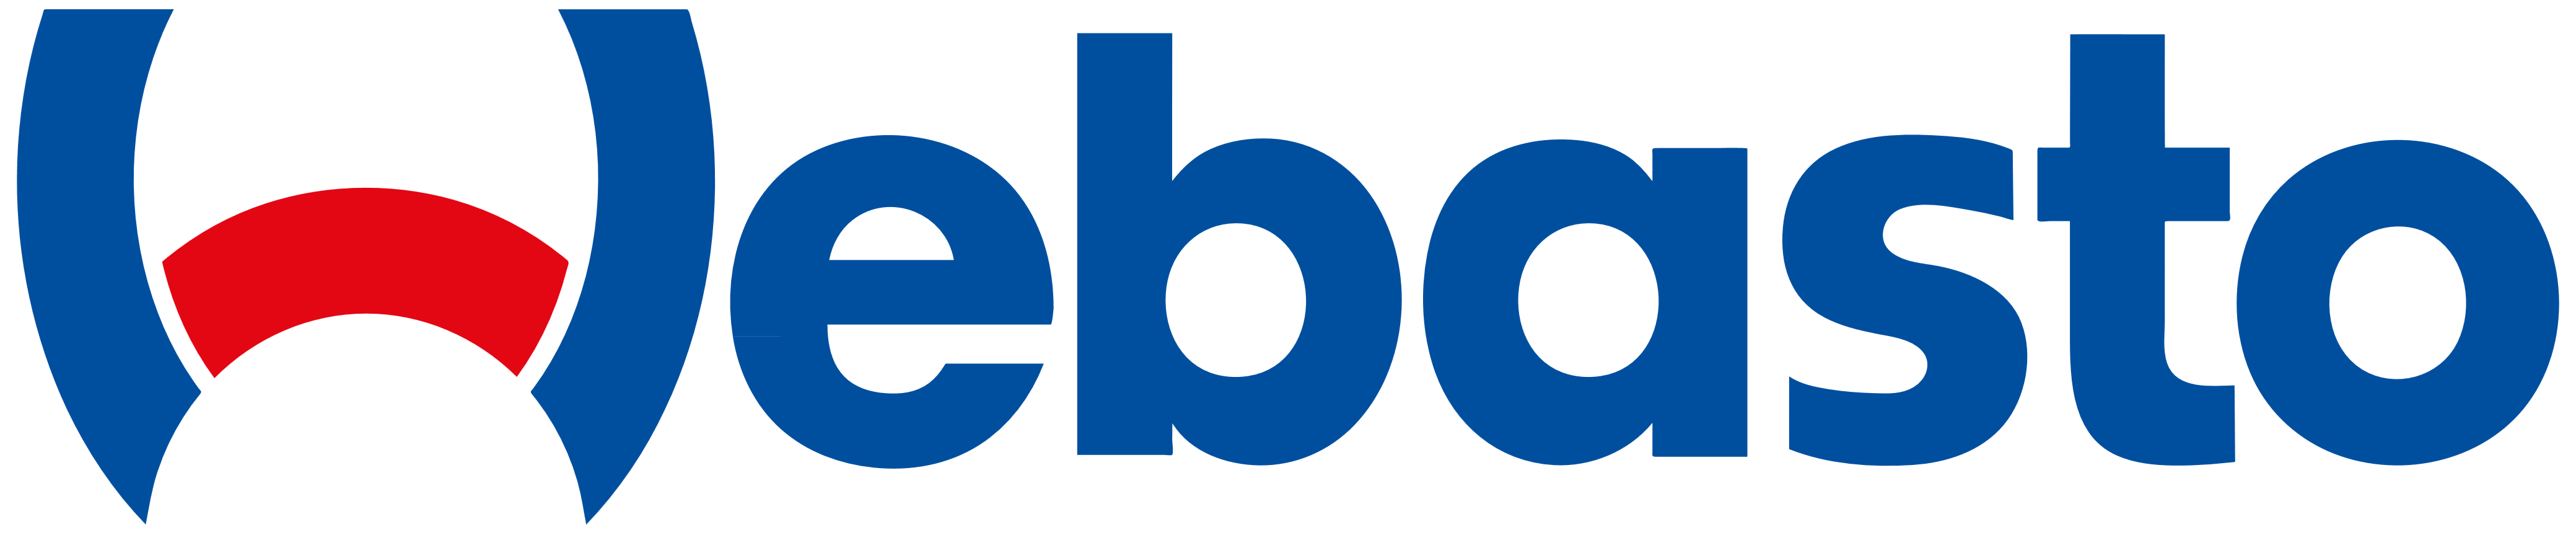 Webasto logo, logotype